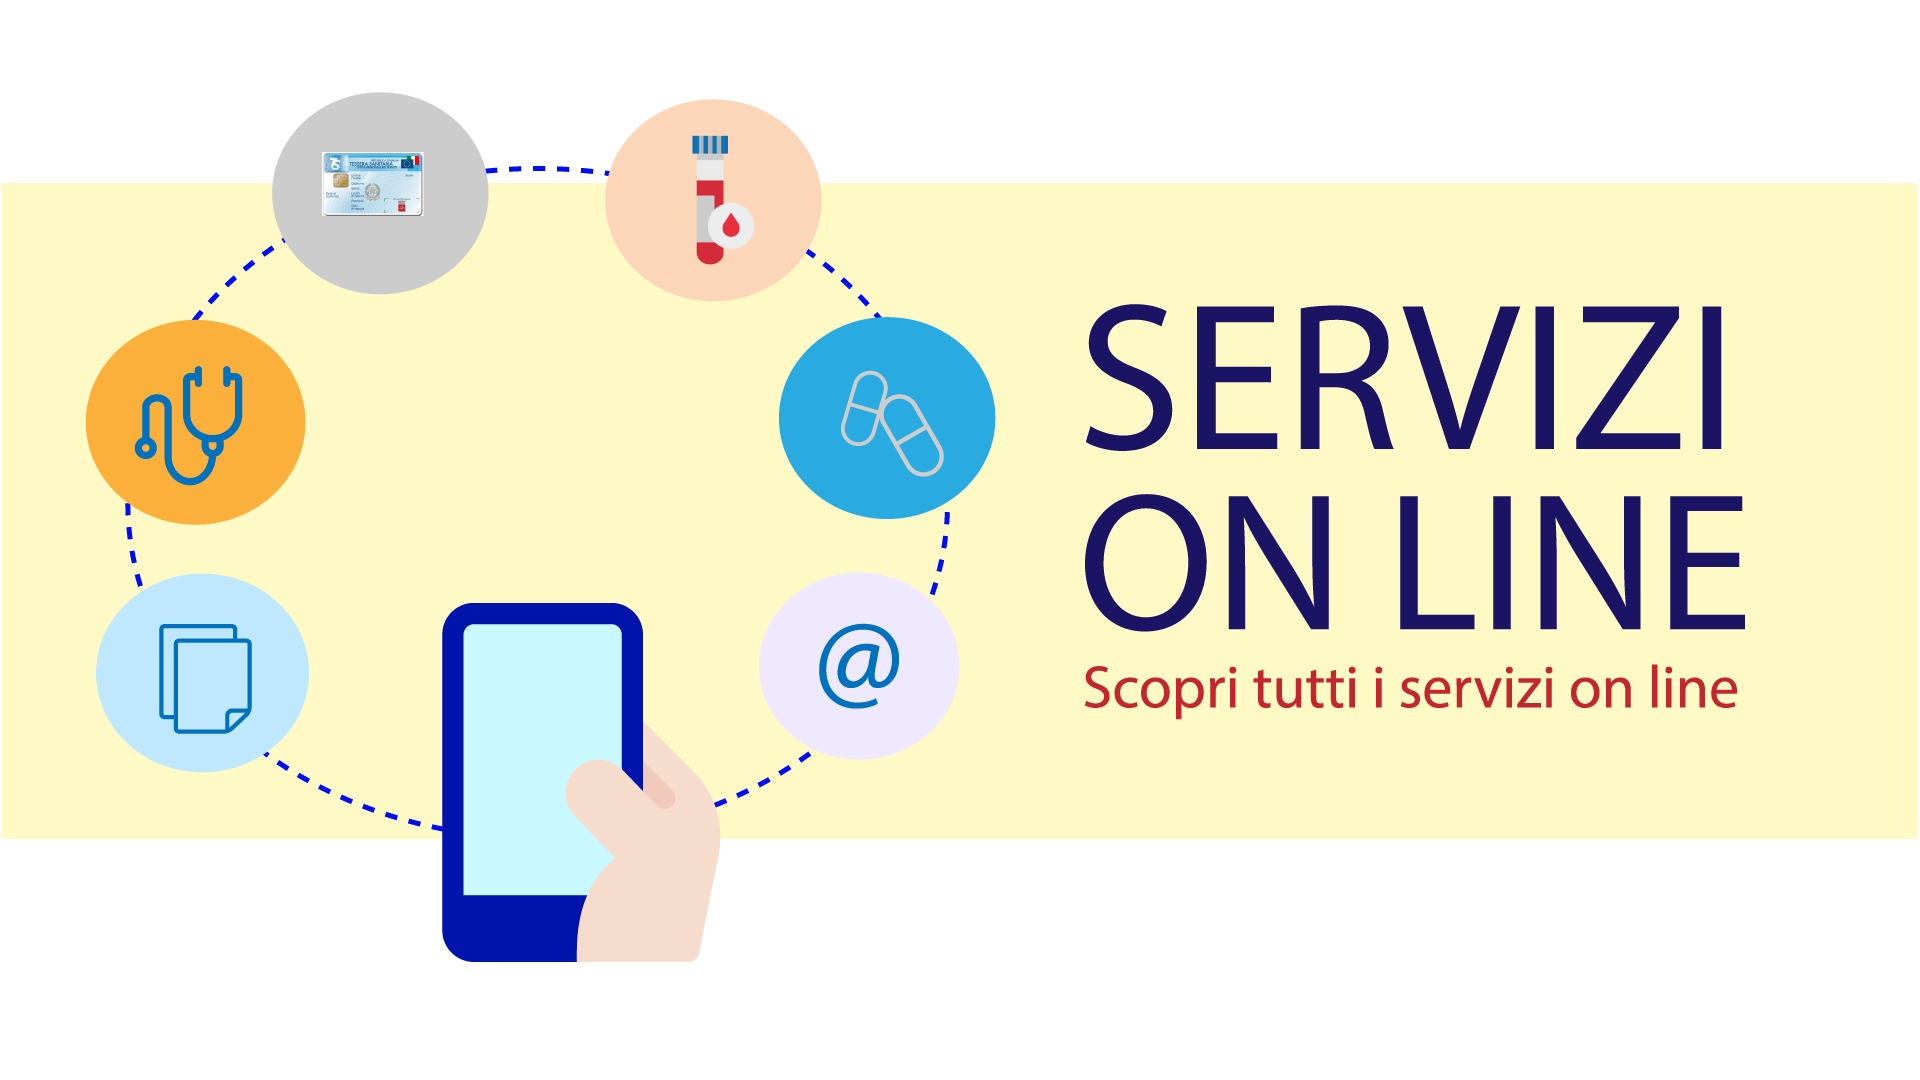 Servizi on line - zero code